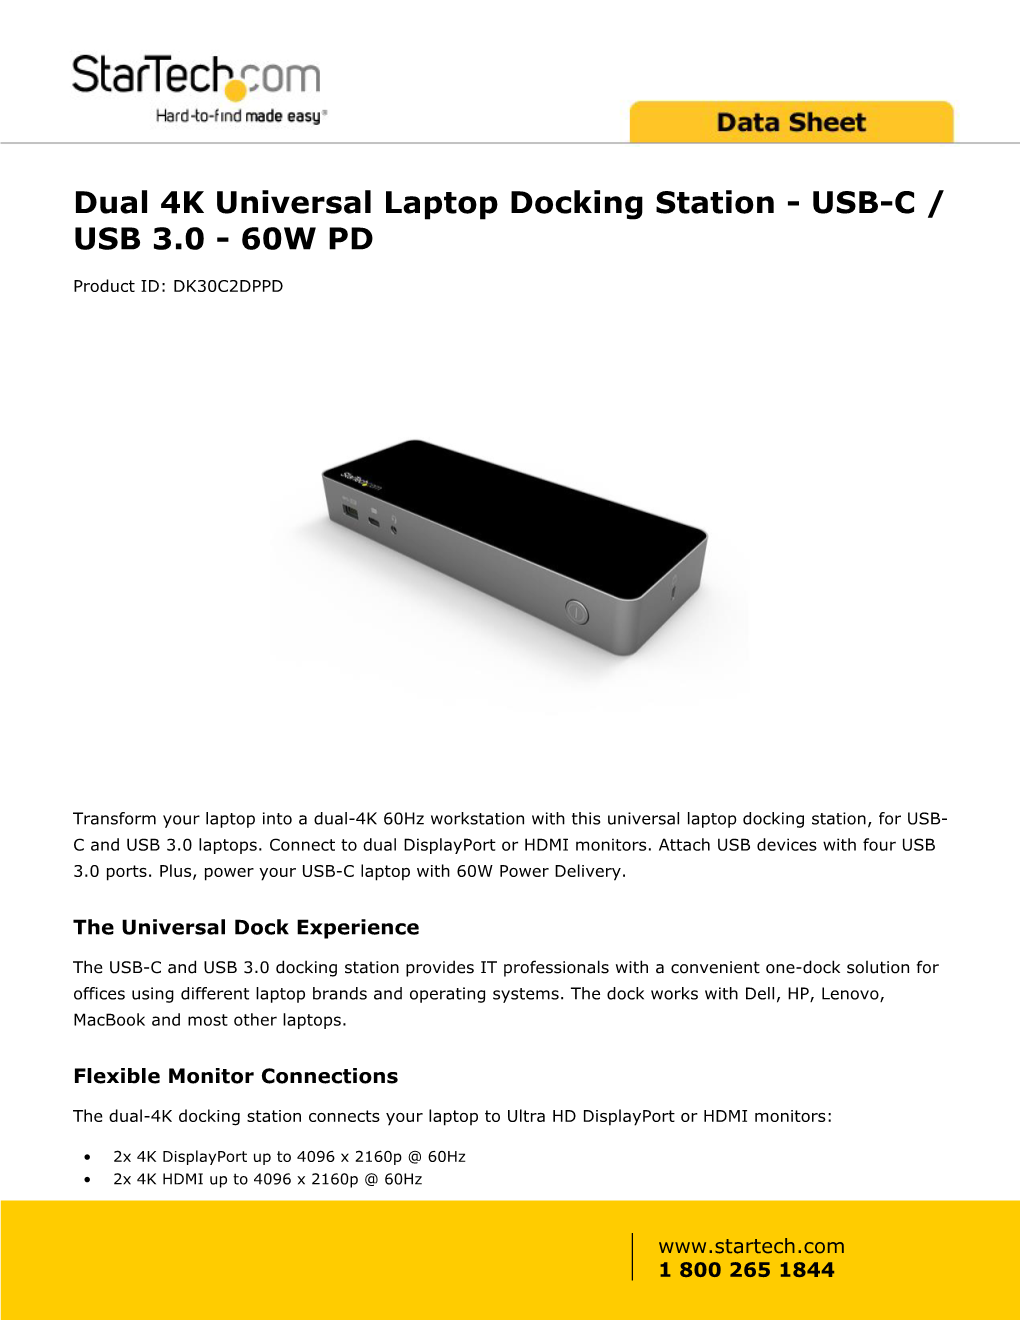 Dual 4K Universal Laptop Docking Station - USB-C / USB 3.0 - 60W PD